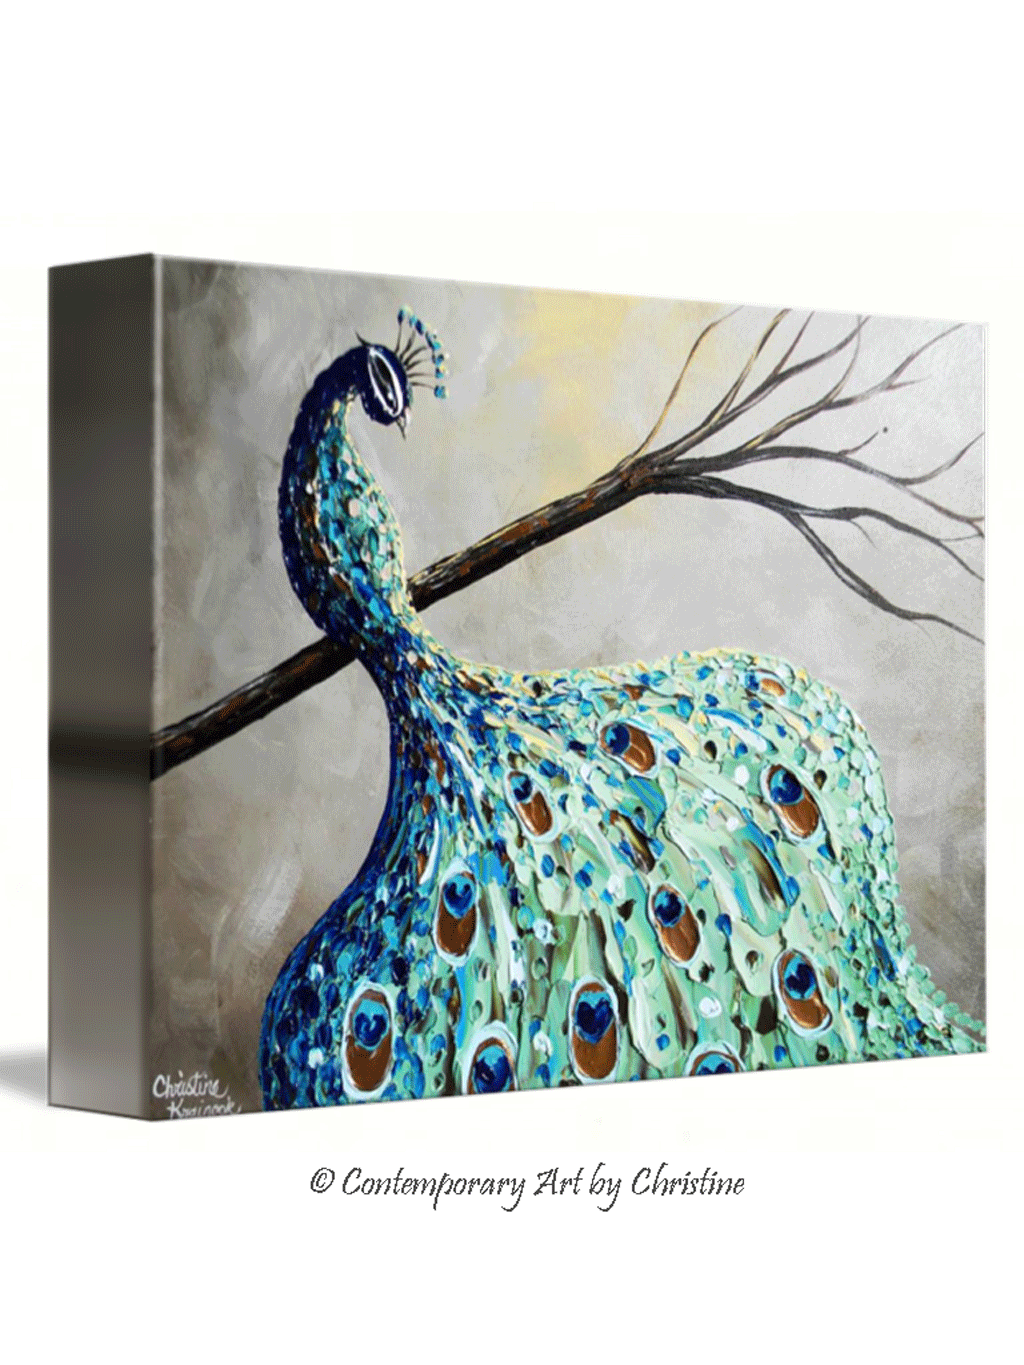 GICLEE PRINT Art Abstract Peacock Painting Modern Canvas Prints Blue Green Grey Brown Gold Bird - Christine Krainock Art - Contemporary Art by Christine - 5